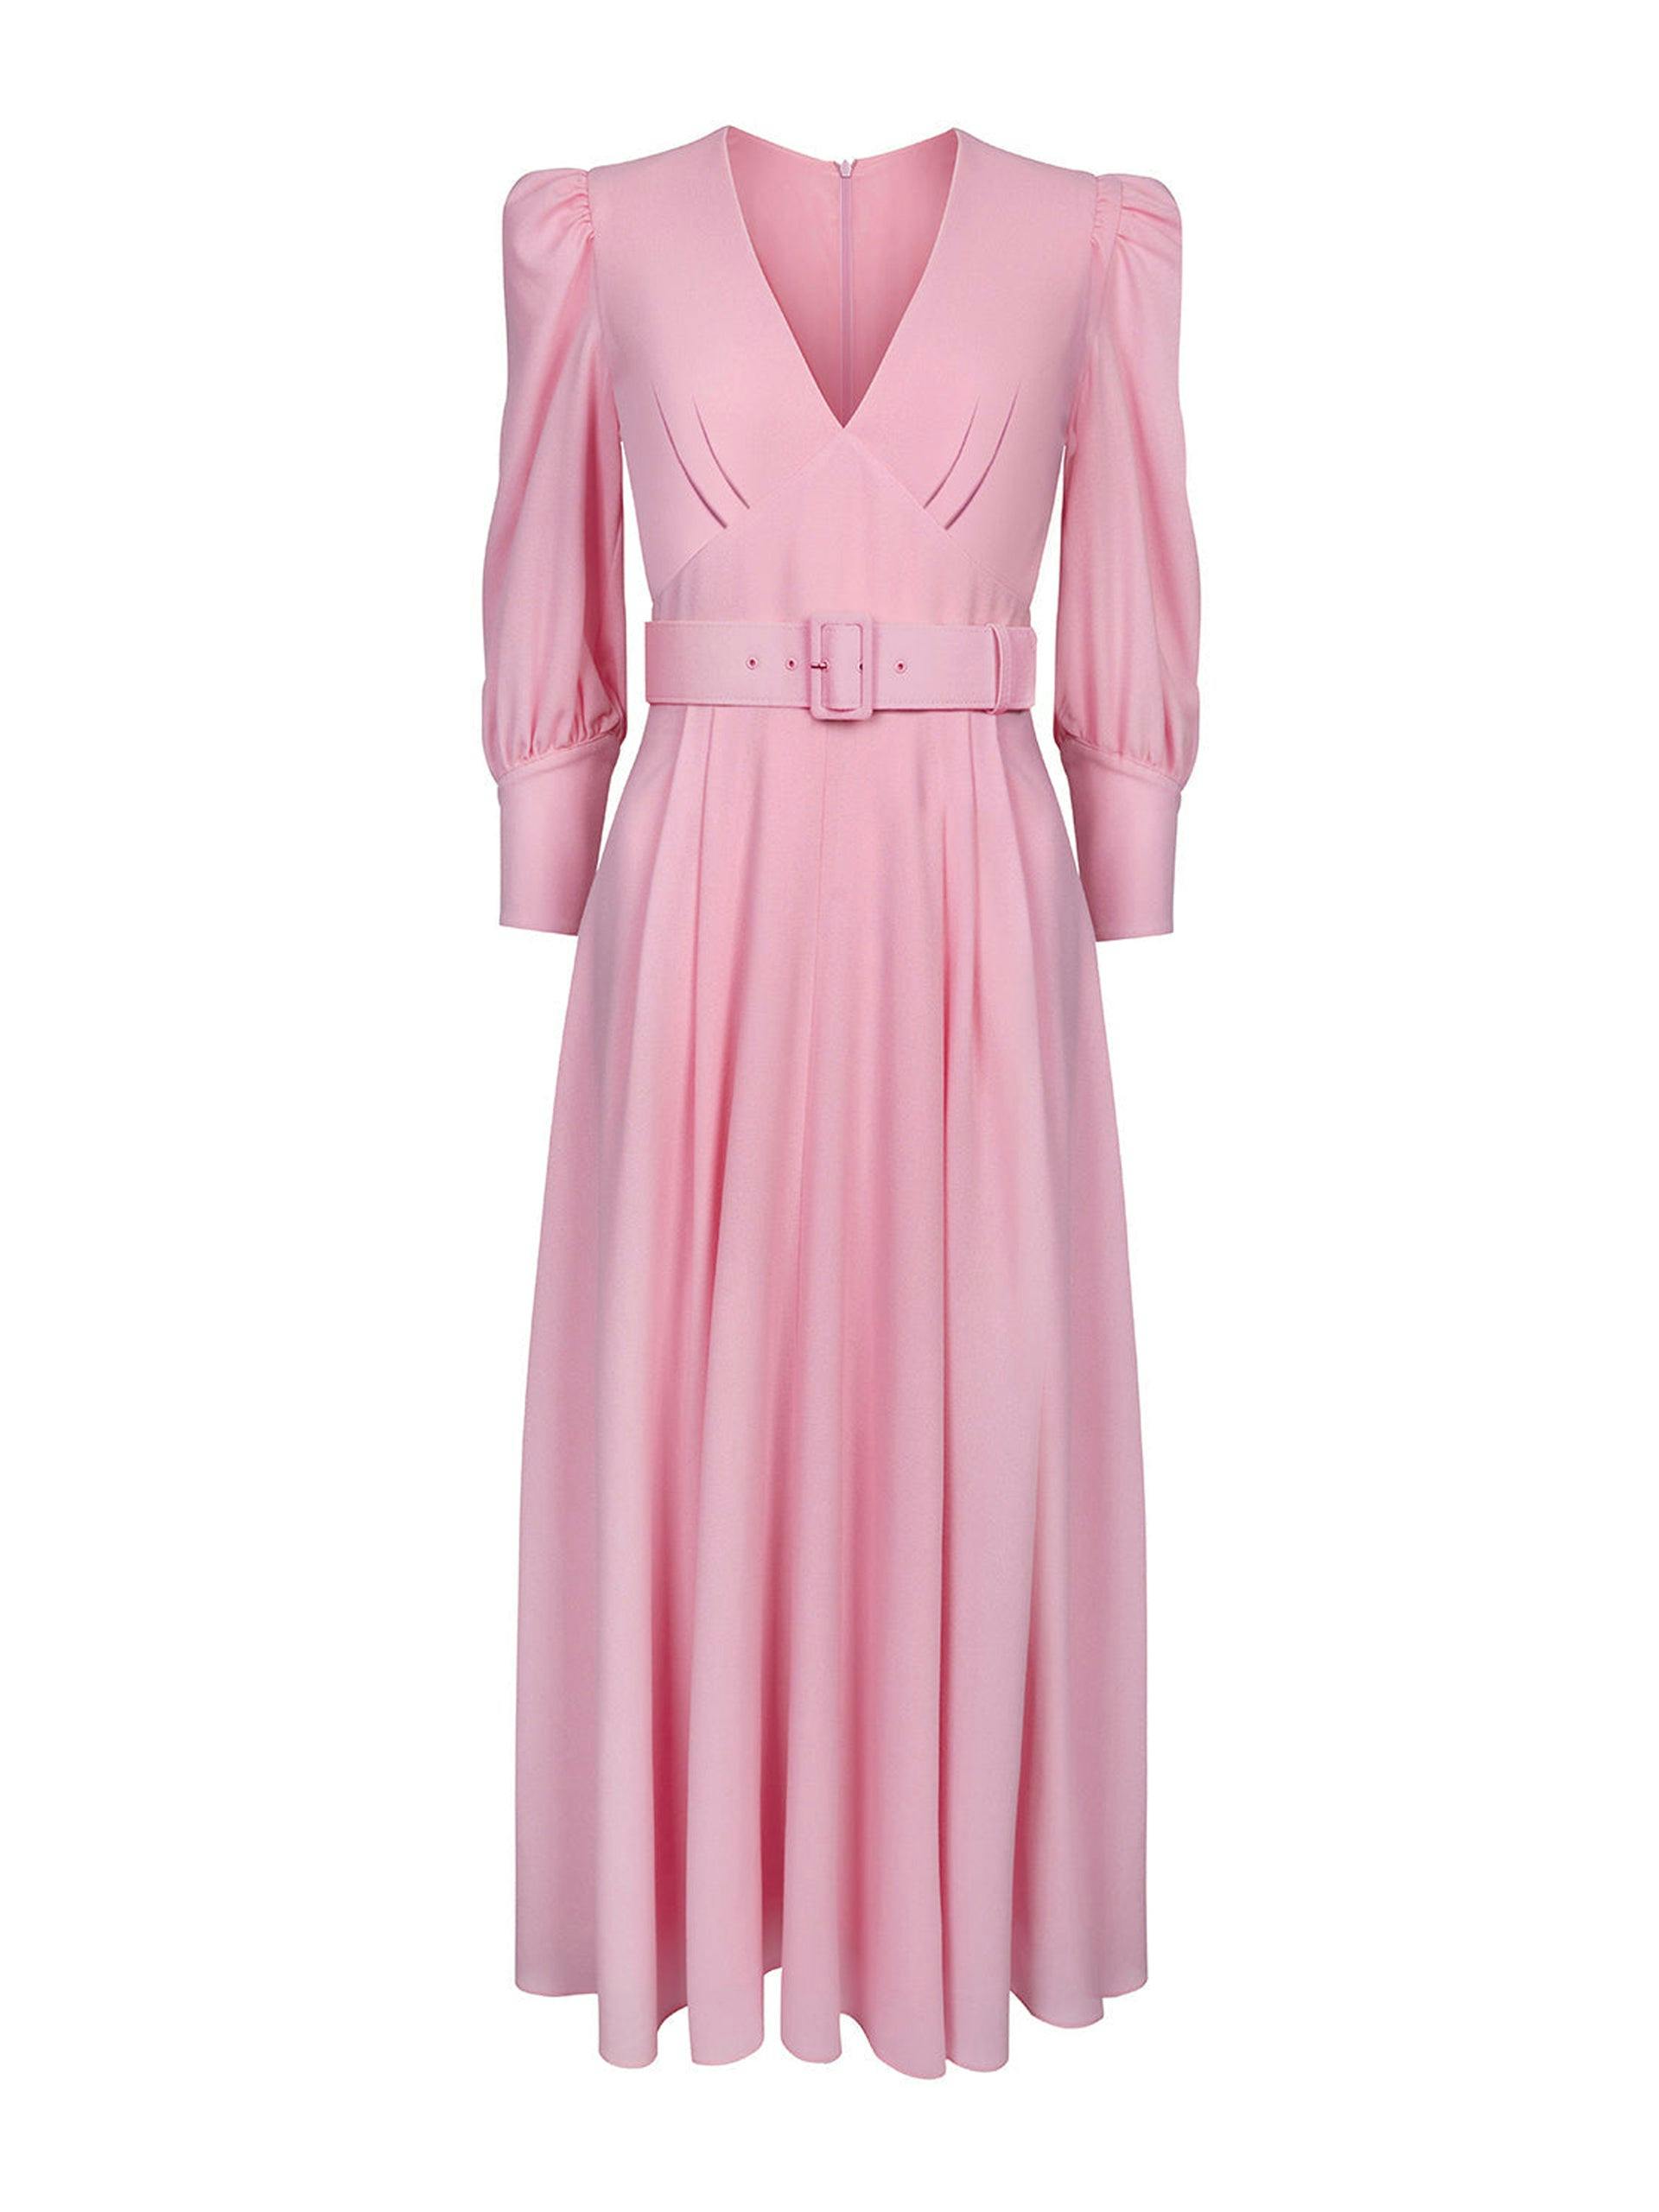 Florentina pale pink dress